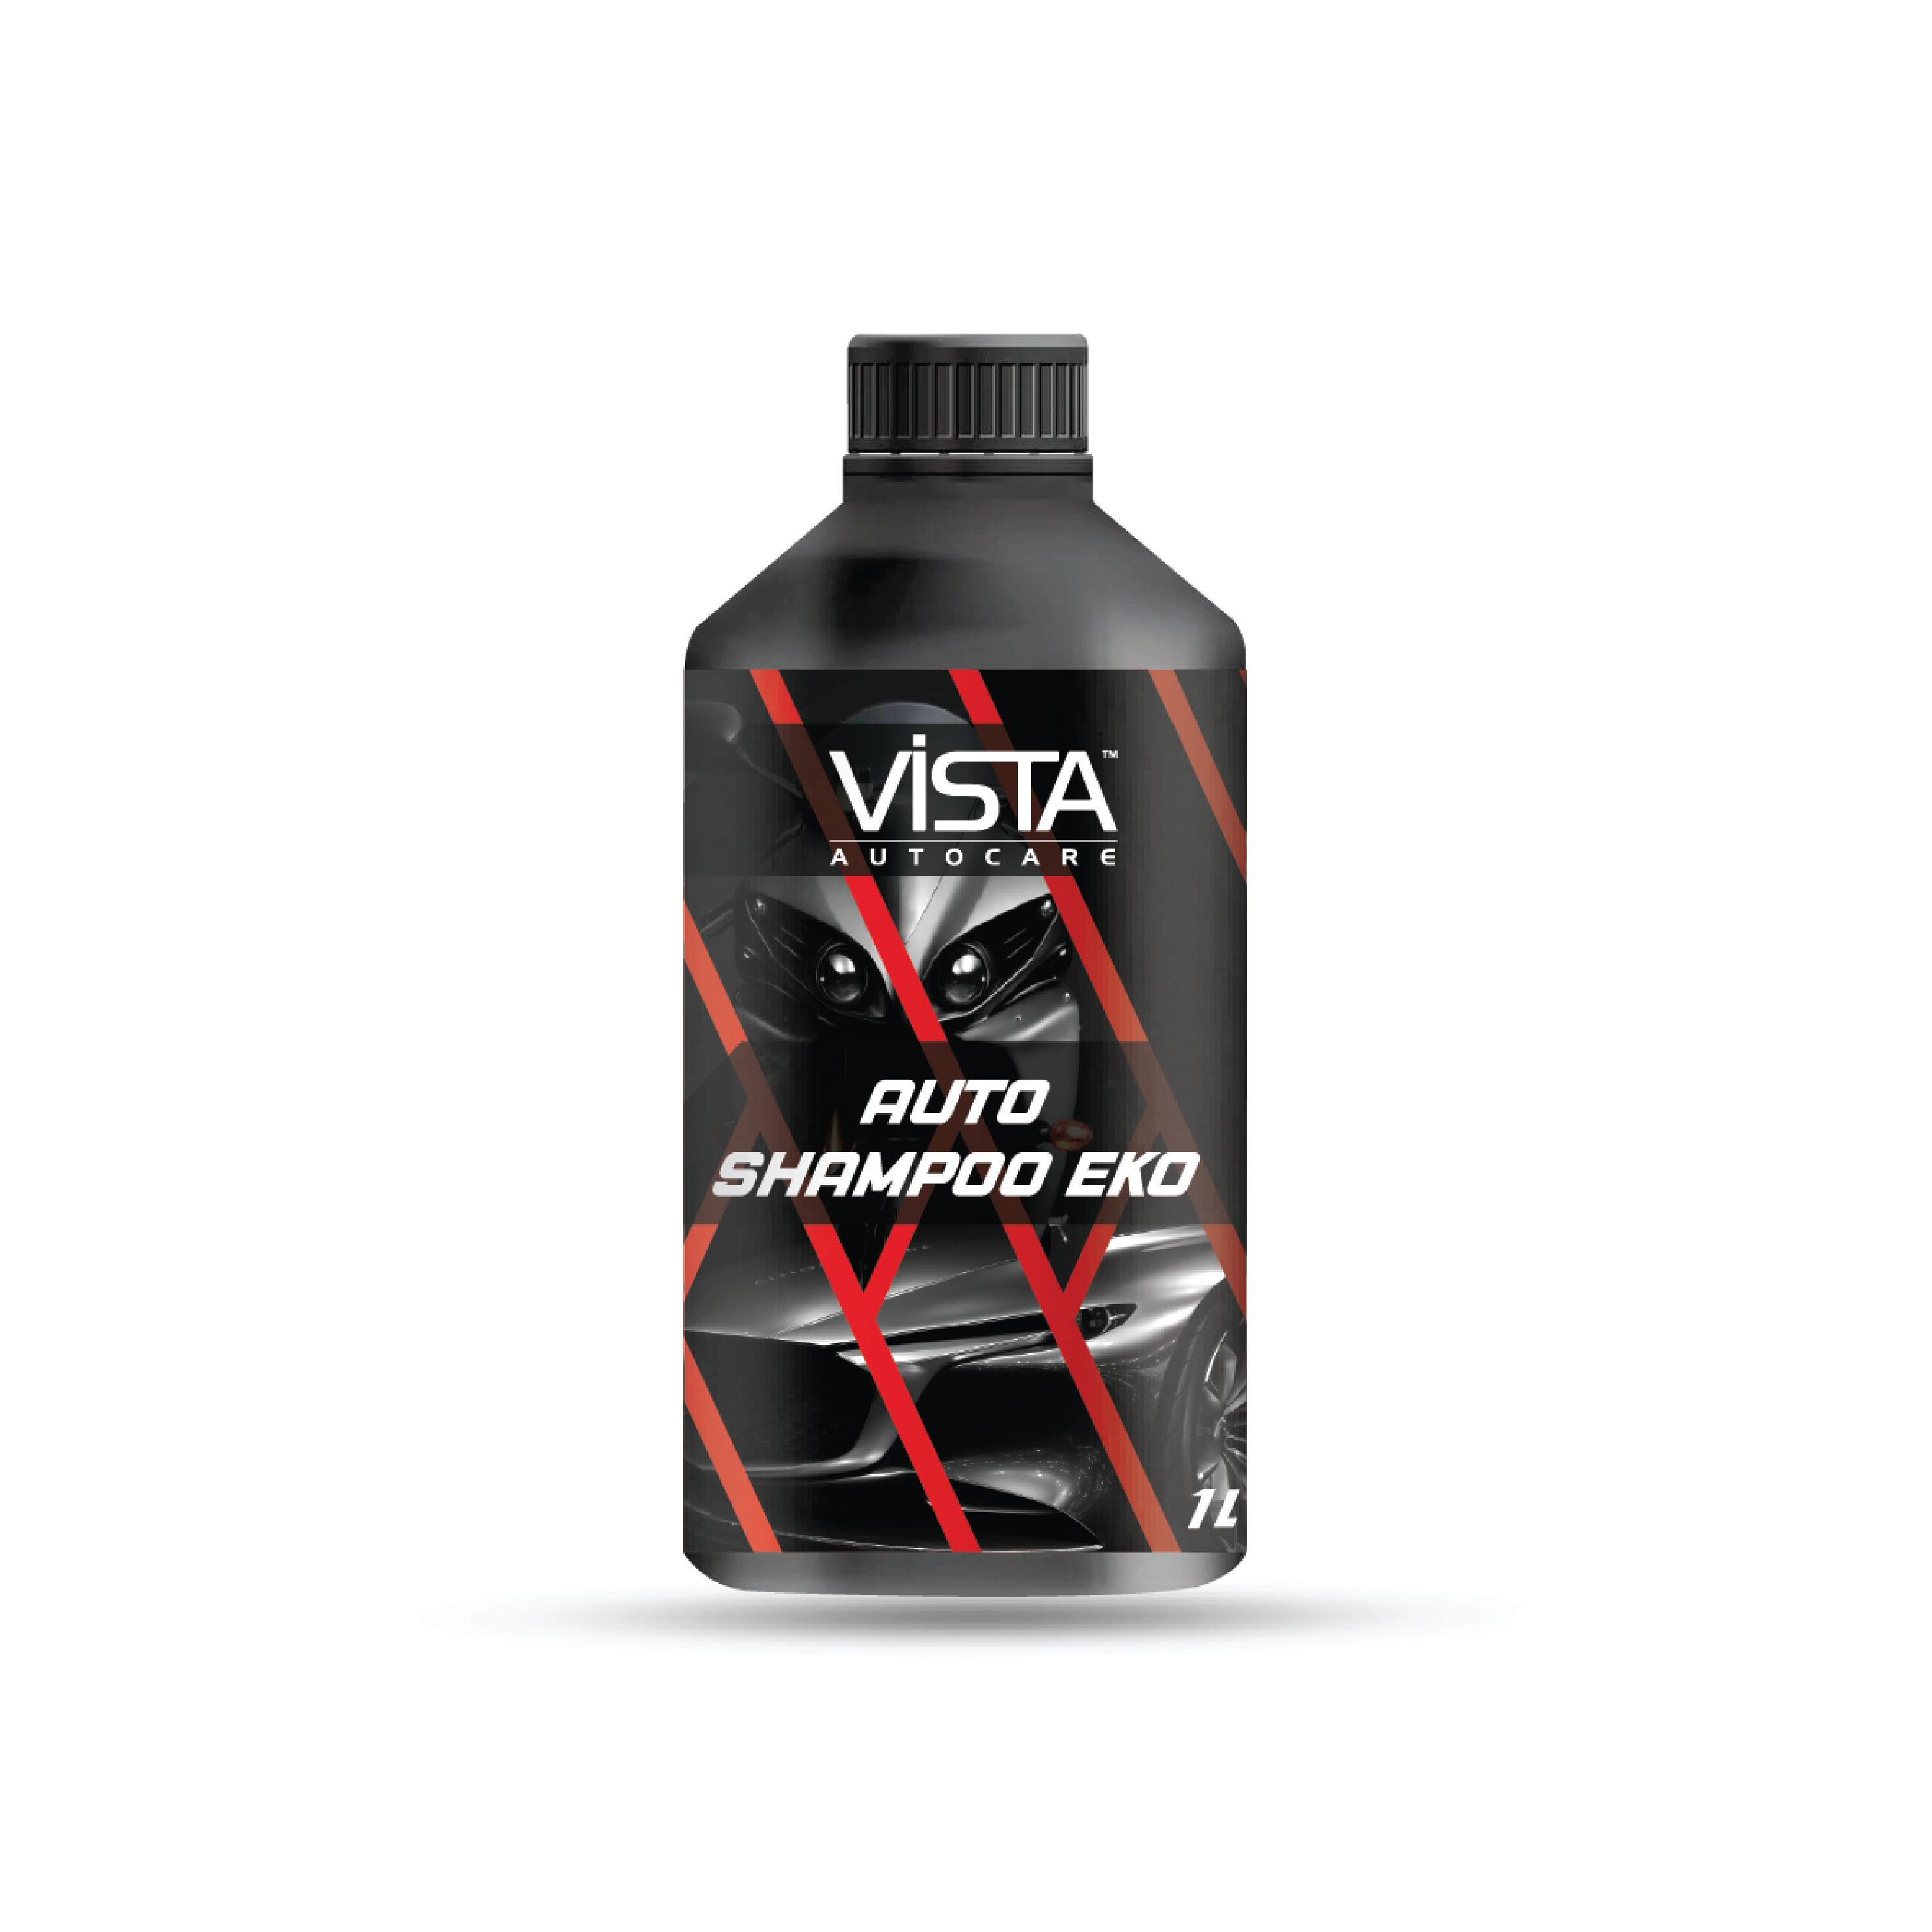 Auto Shampoo Eko 1L - pH Balance Formula, For Car and Bike